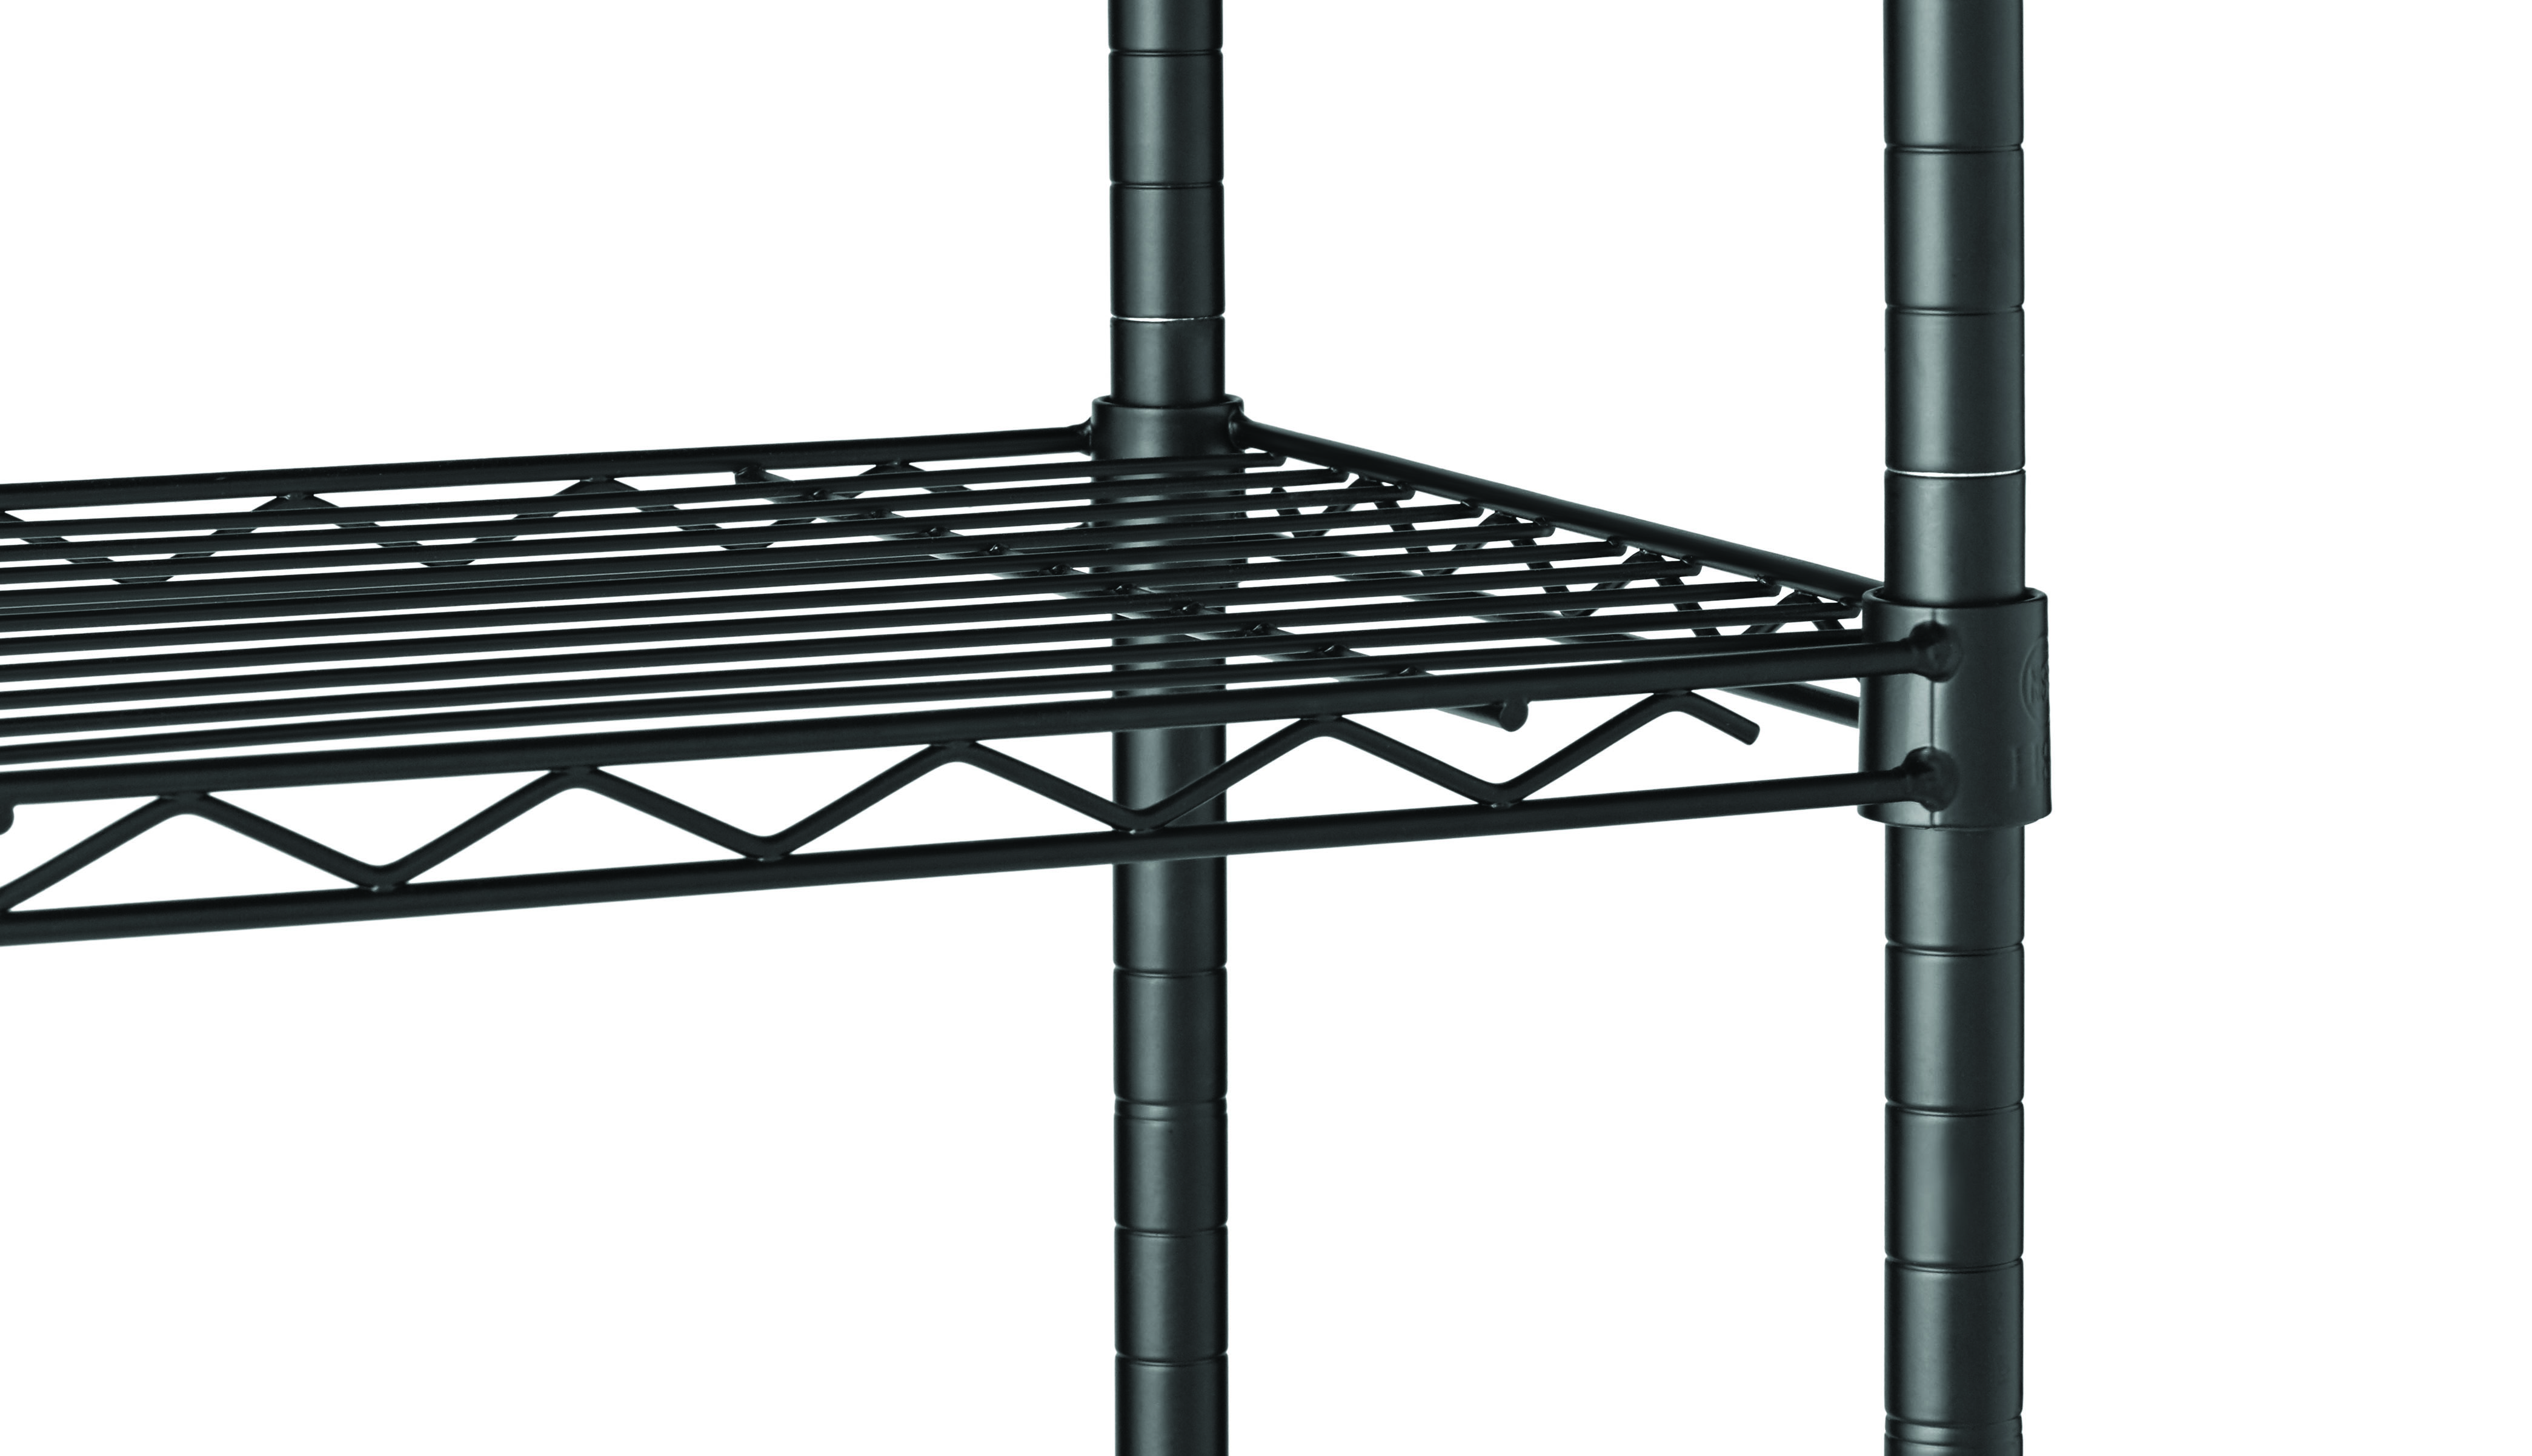 HSS Steel Extra Wire Shelf 13.4"x23.2", Fits 3/4" Pole Diameter, Black, Shelf Capacity 250 lbs - image 2 of 3